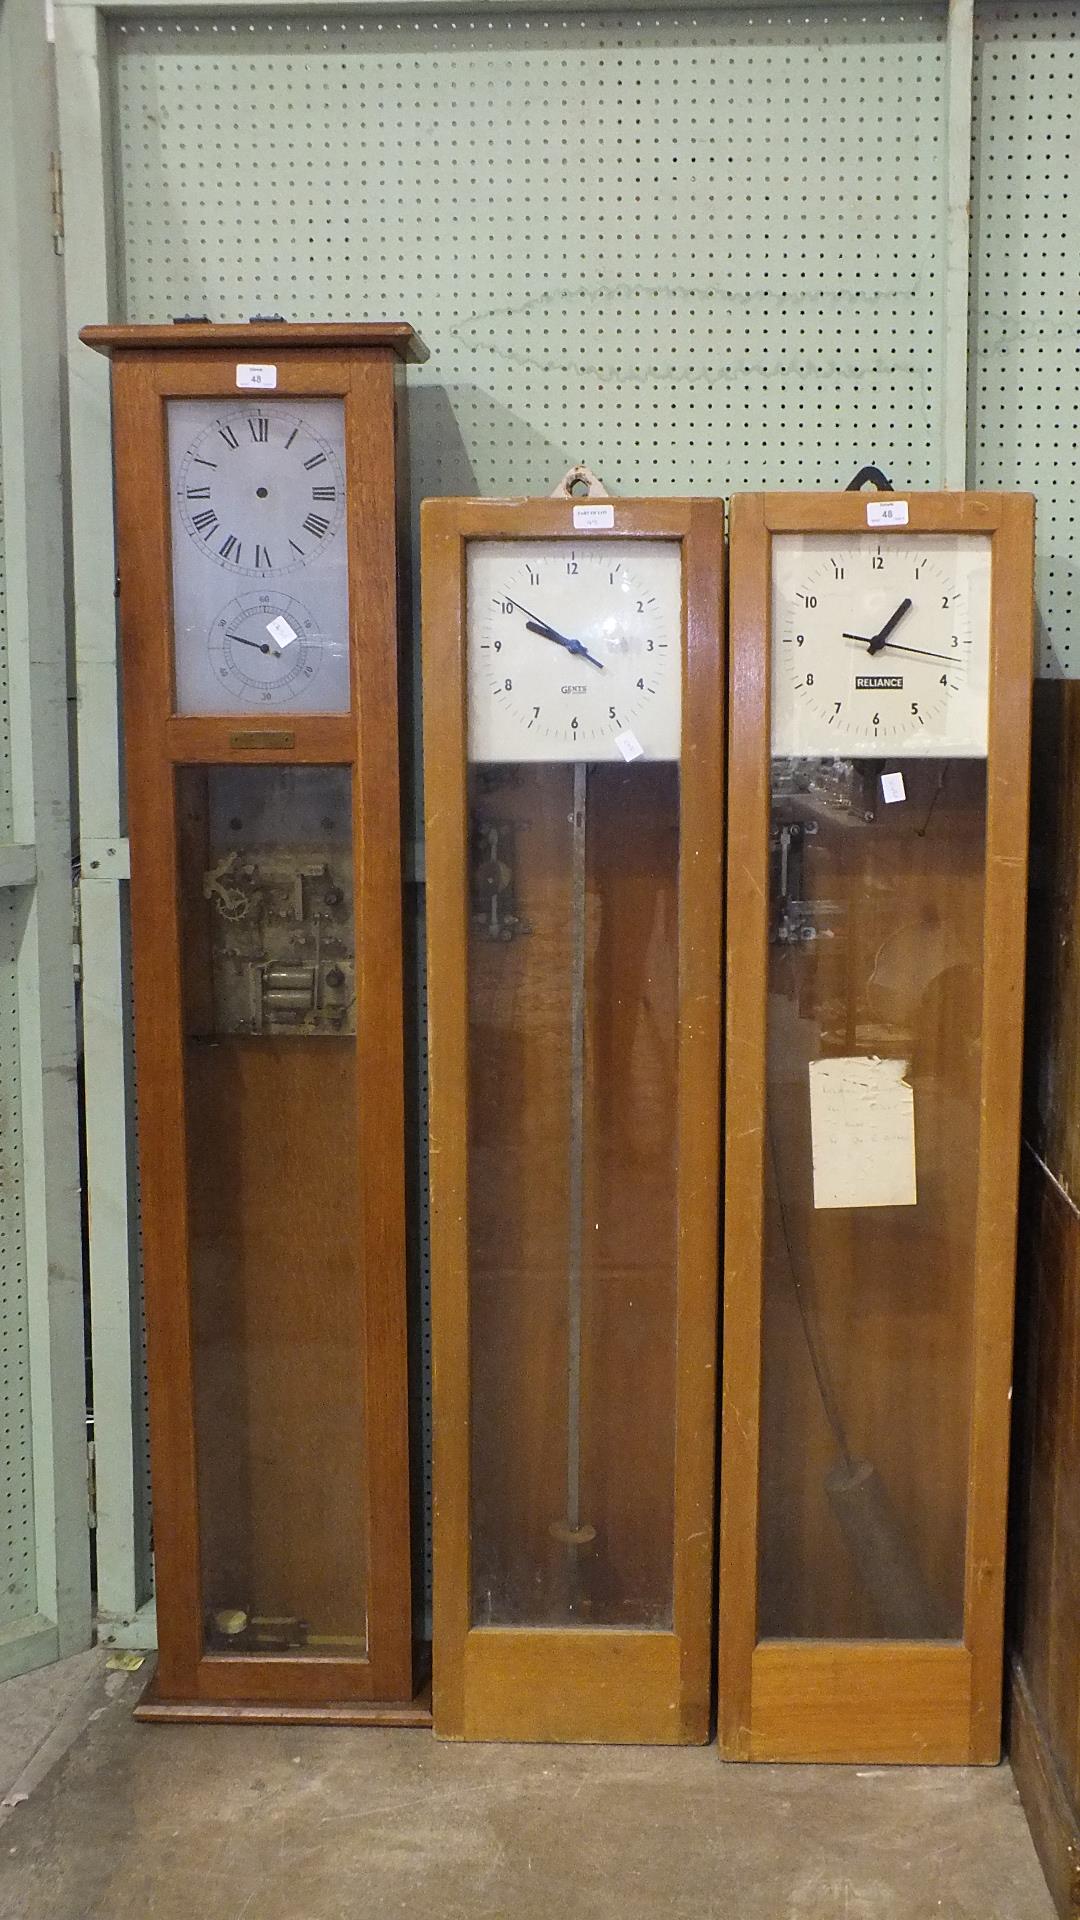 A Gents electric master clock, 168cm high, a similar electric master clock with 'Reliance' on